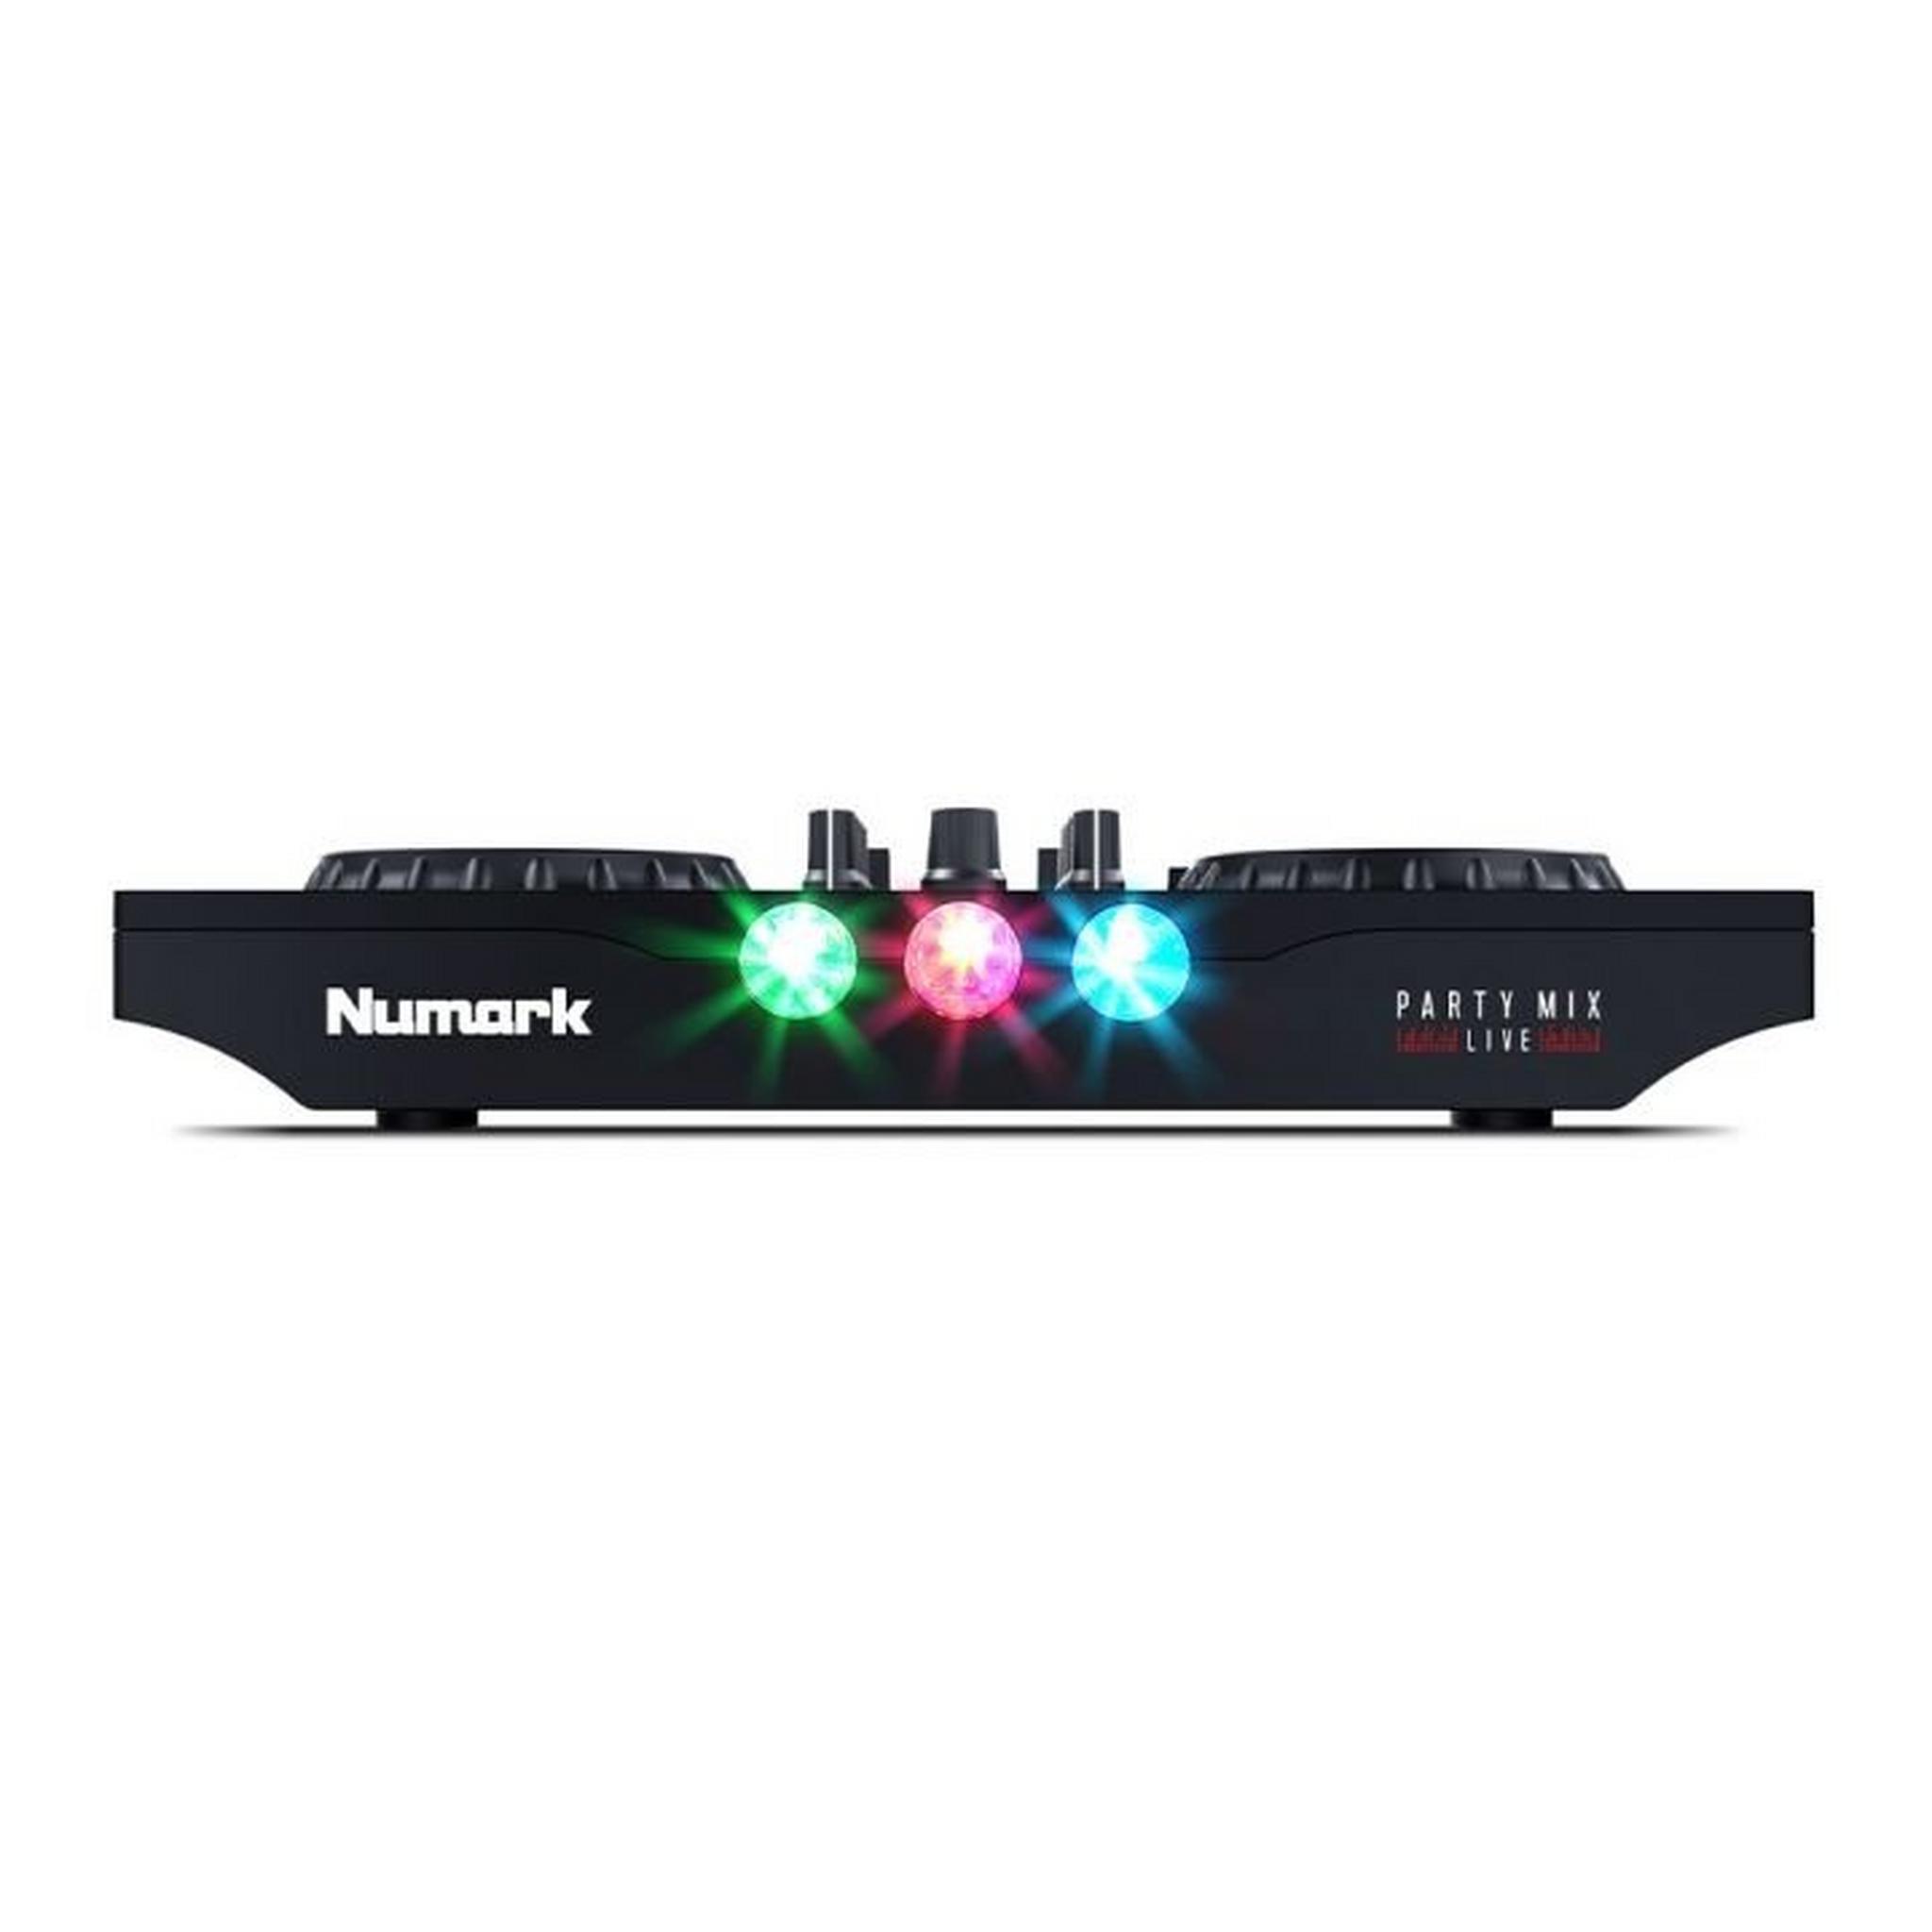 Numark Party Mix Live Dj Controller - Light Show & Speakers